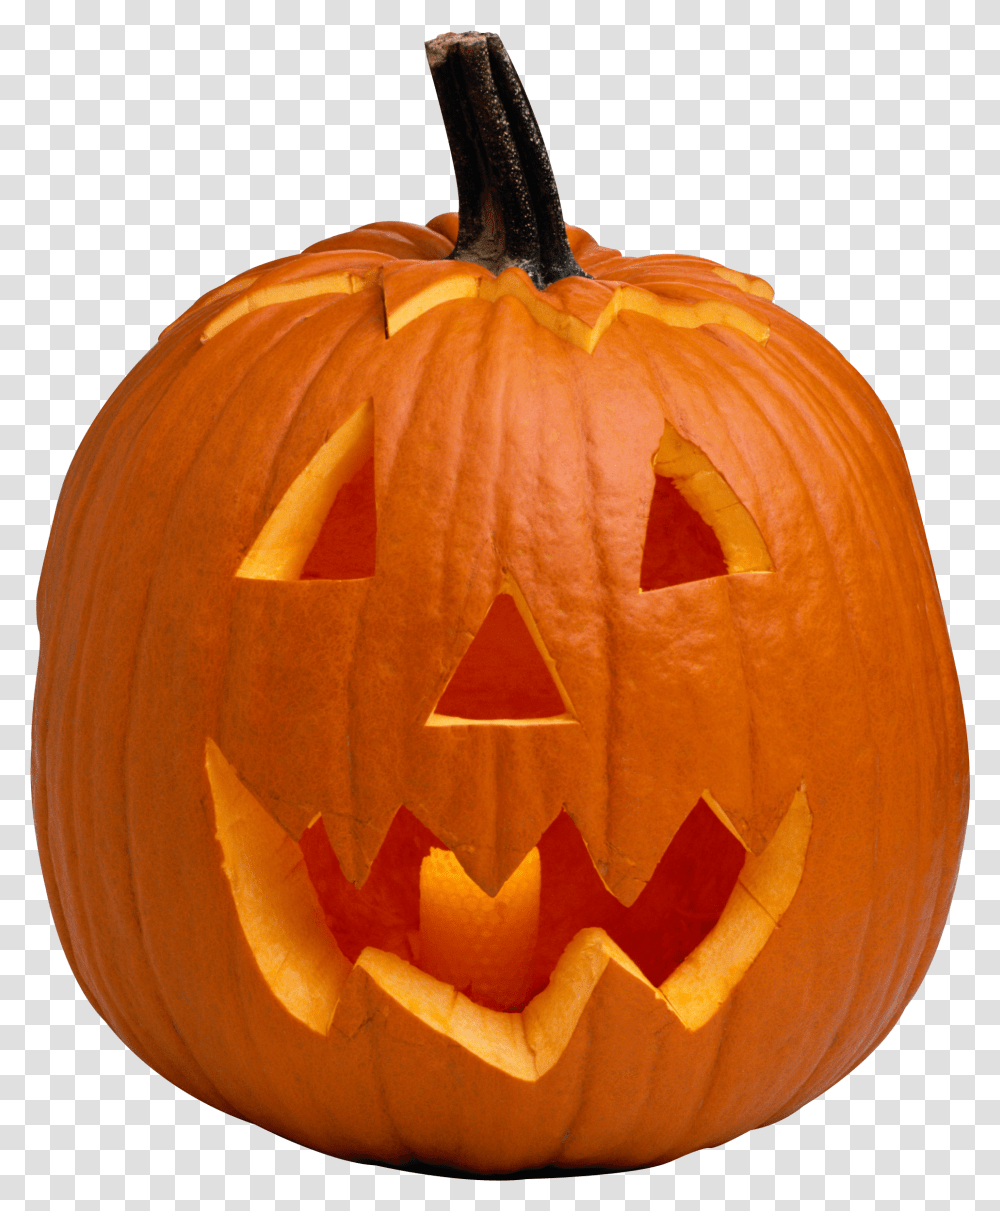 Download Halloween Pumpkin Image Pumpkin Carving Transparent Png